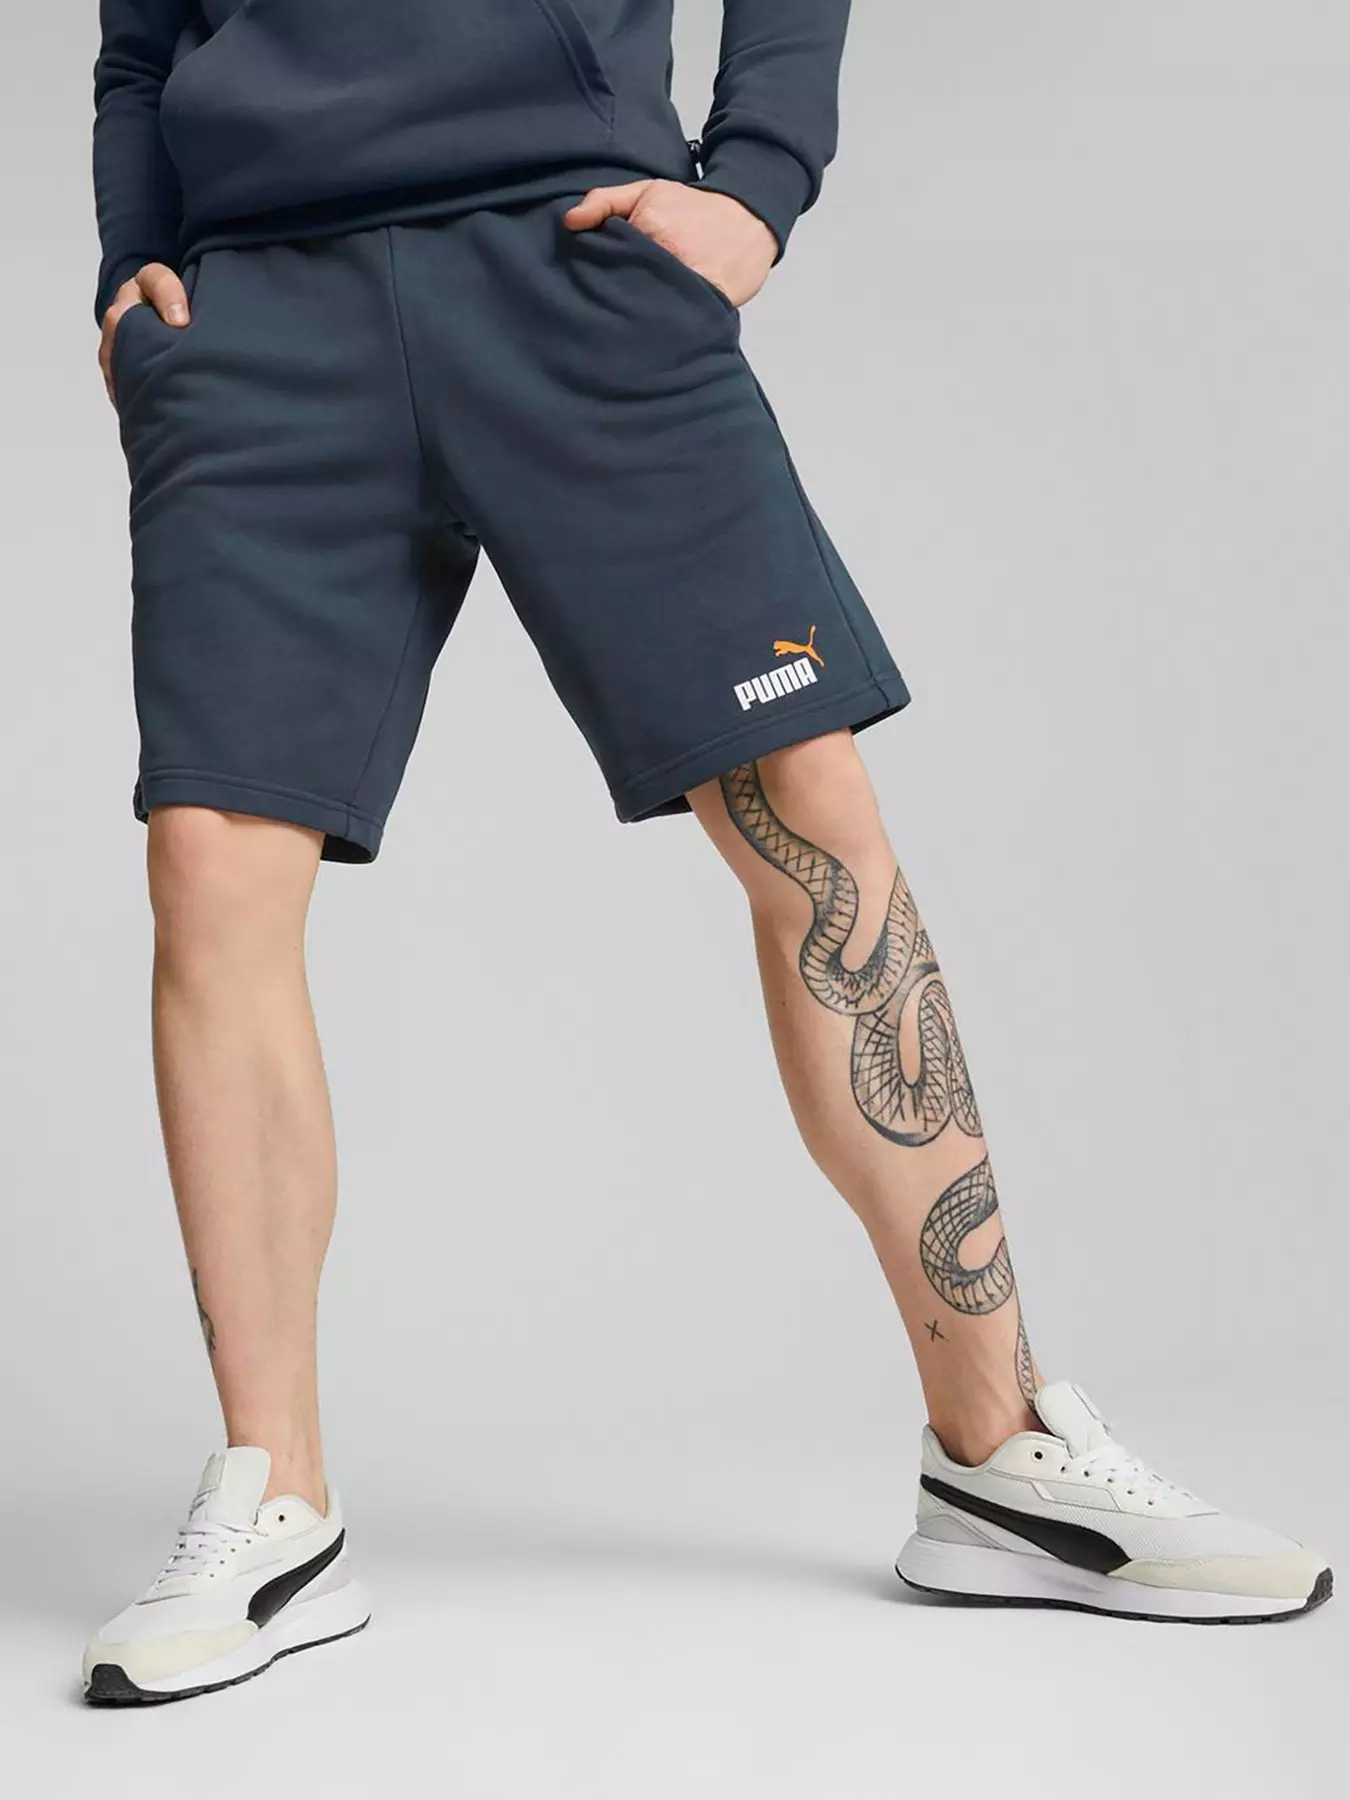 | Very Sportswear Men Ireland Puma | Shorts | |